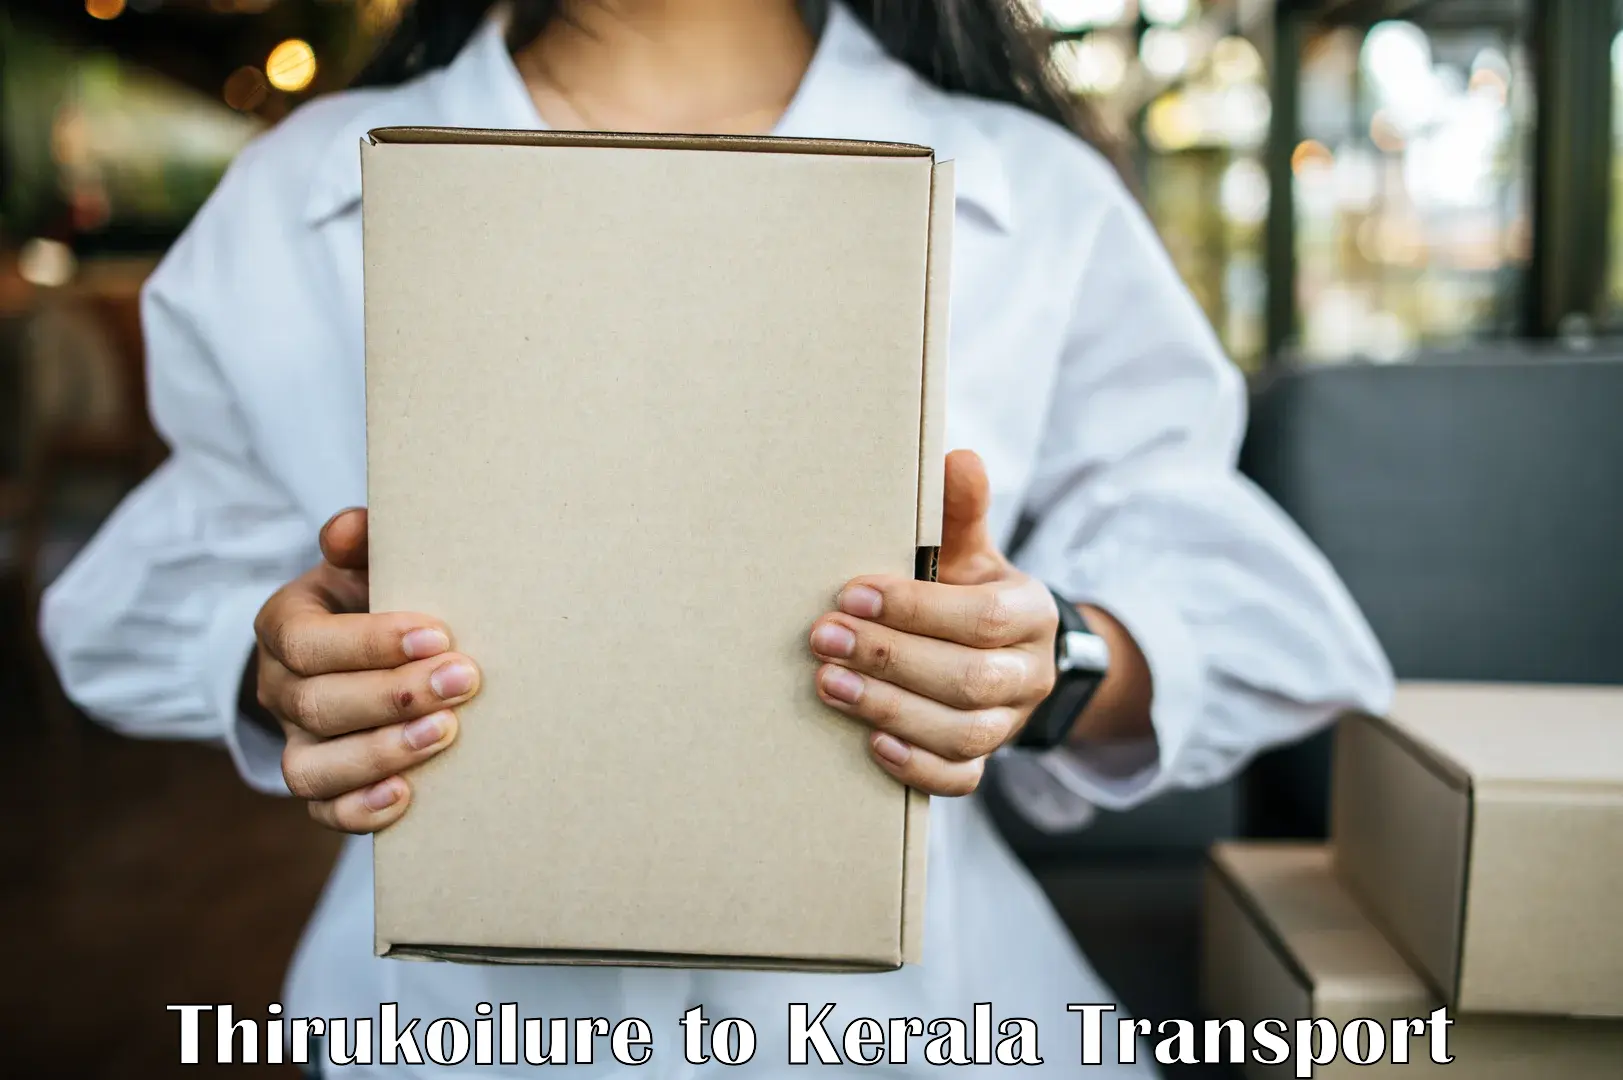 Daily parcel service transport Thirukoilure to Kondotty